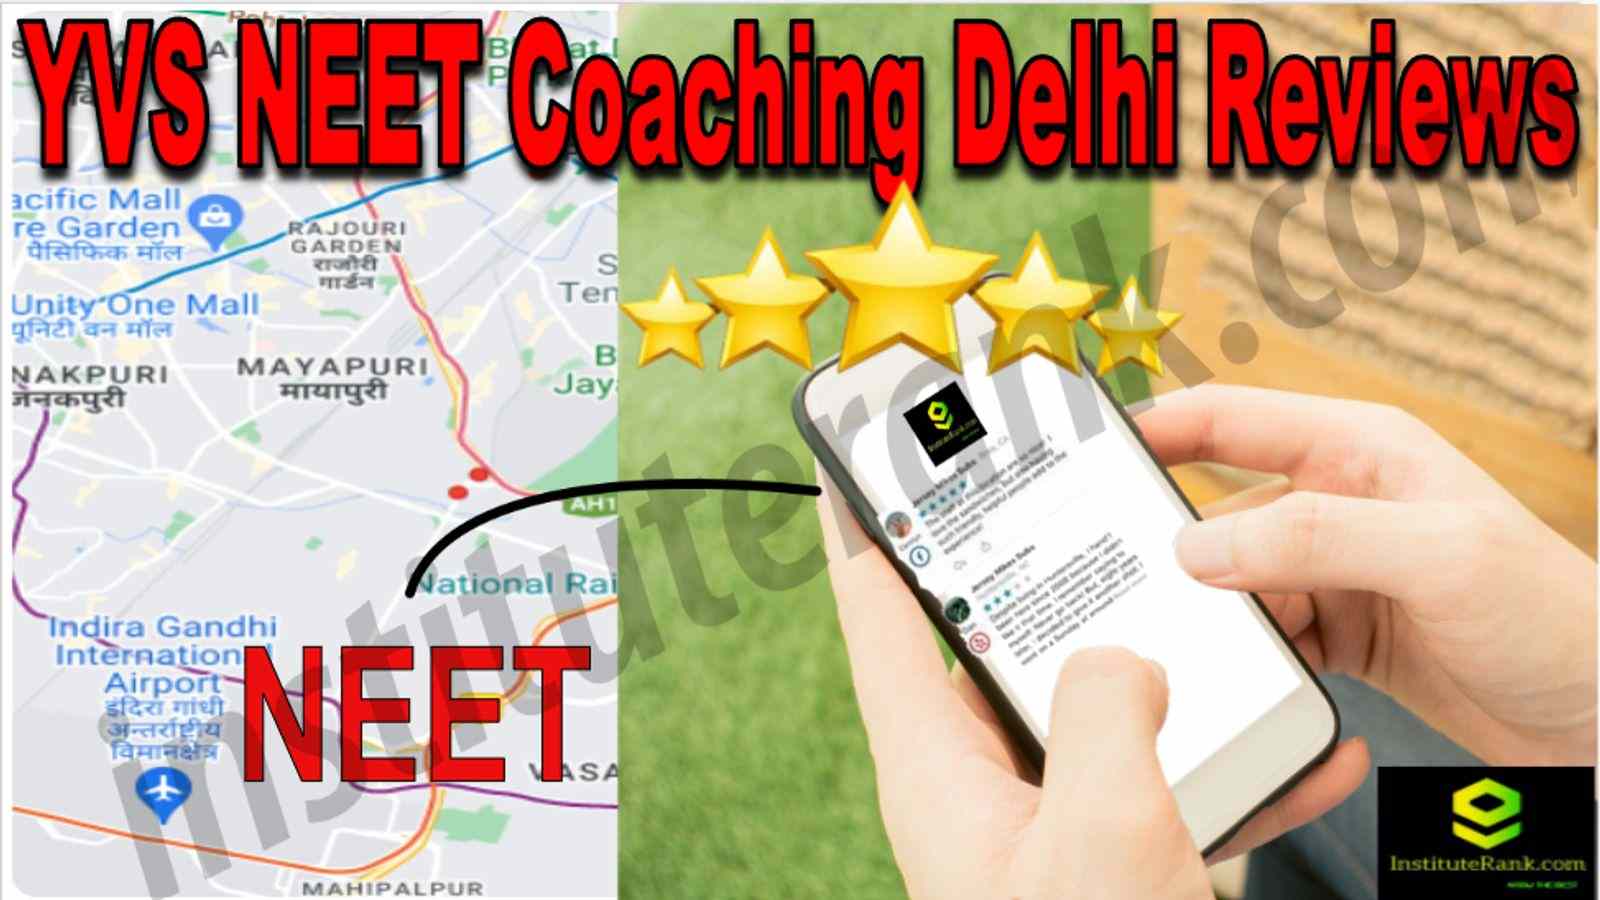 YVS Neet Coaching Delhi Reviews